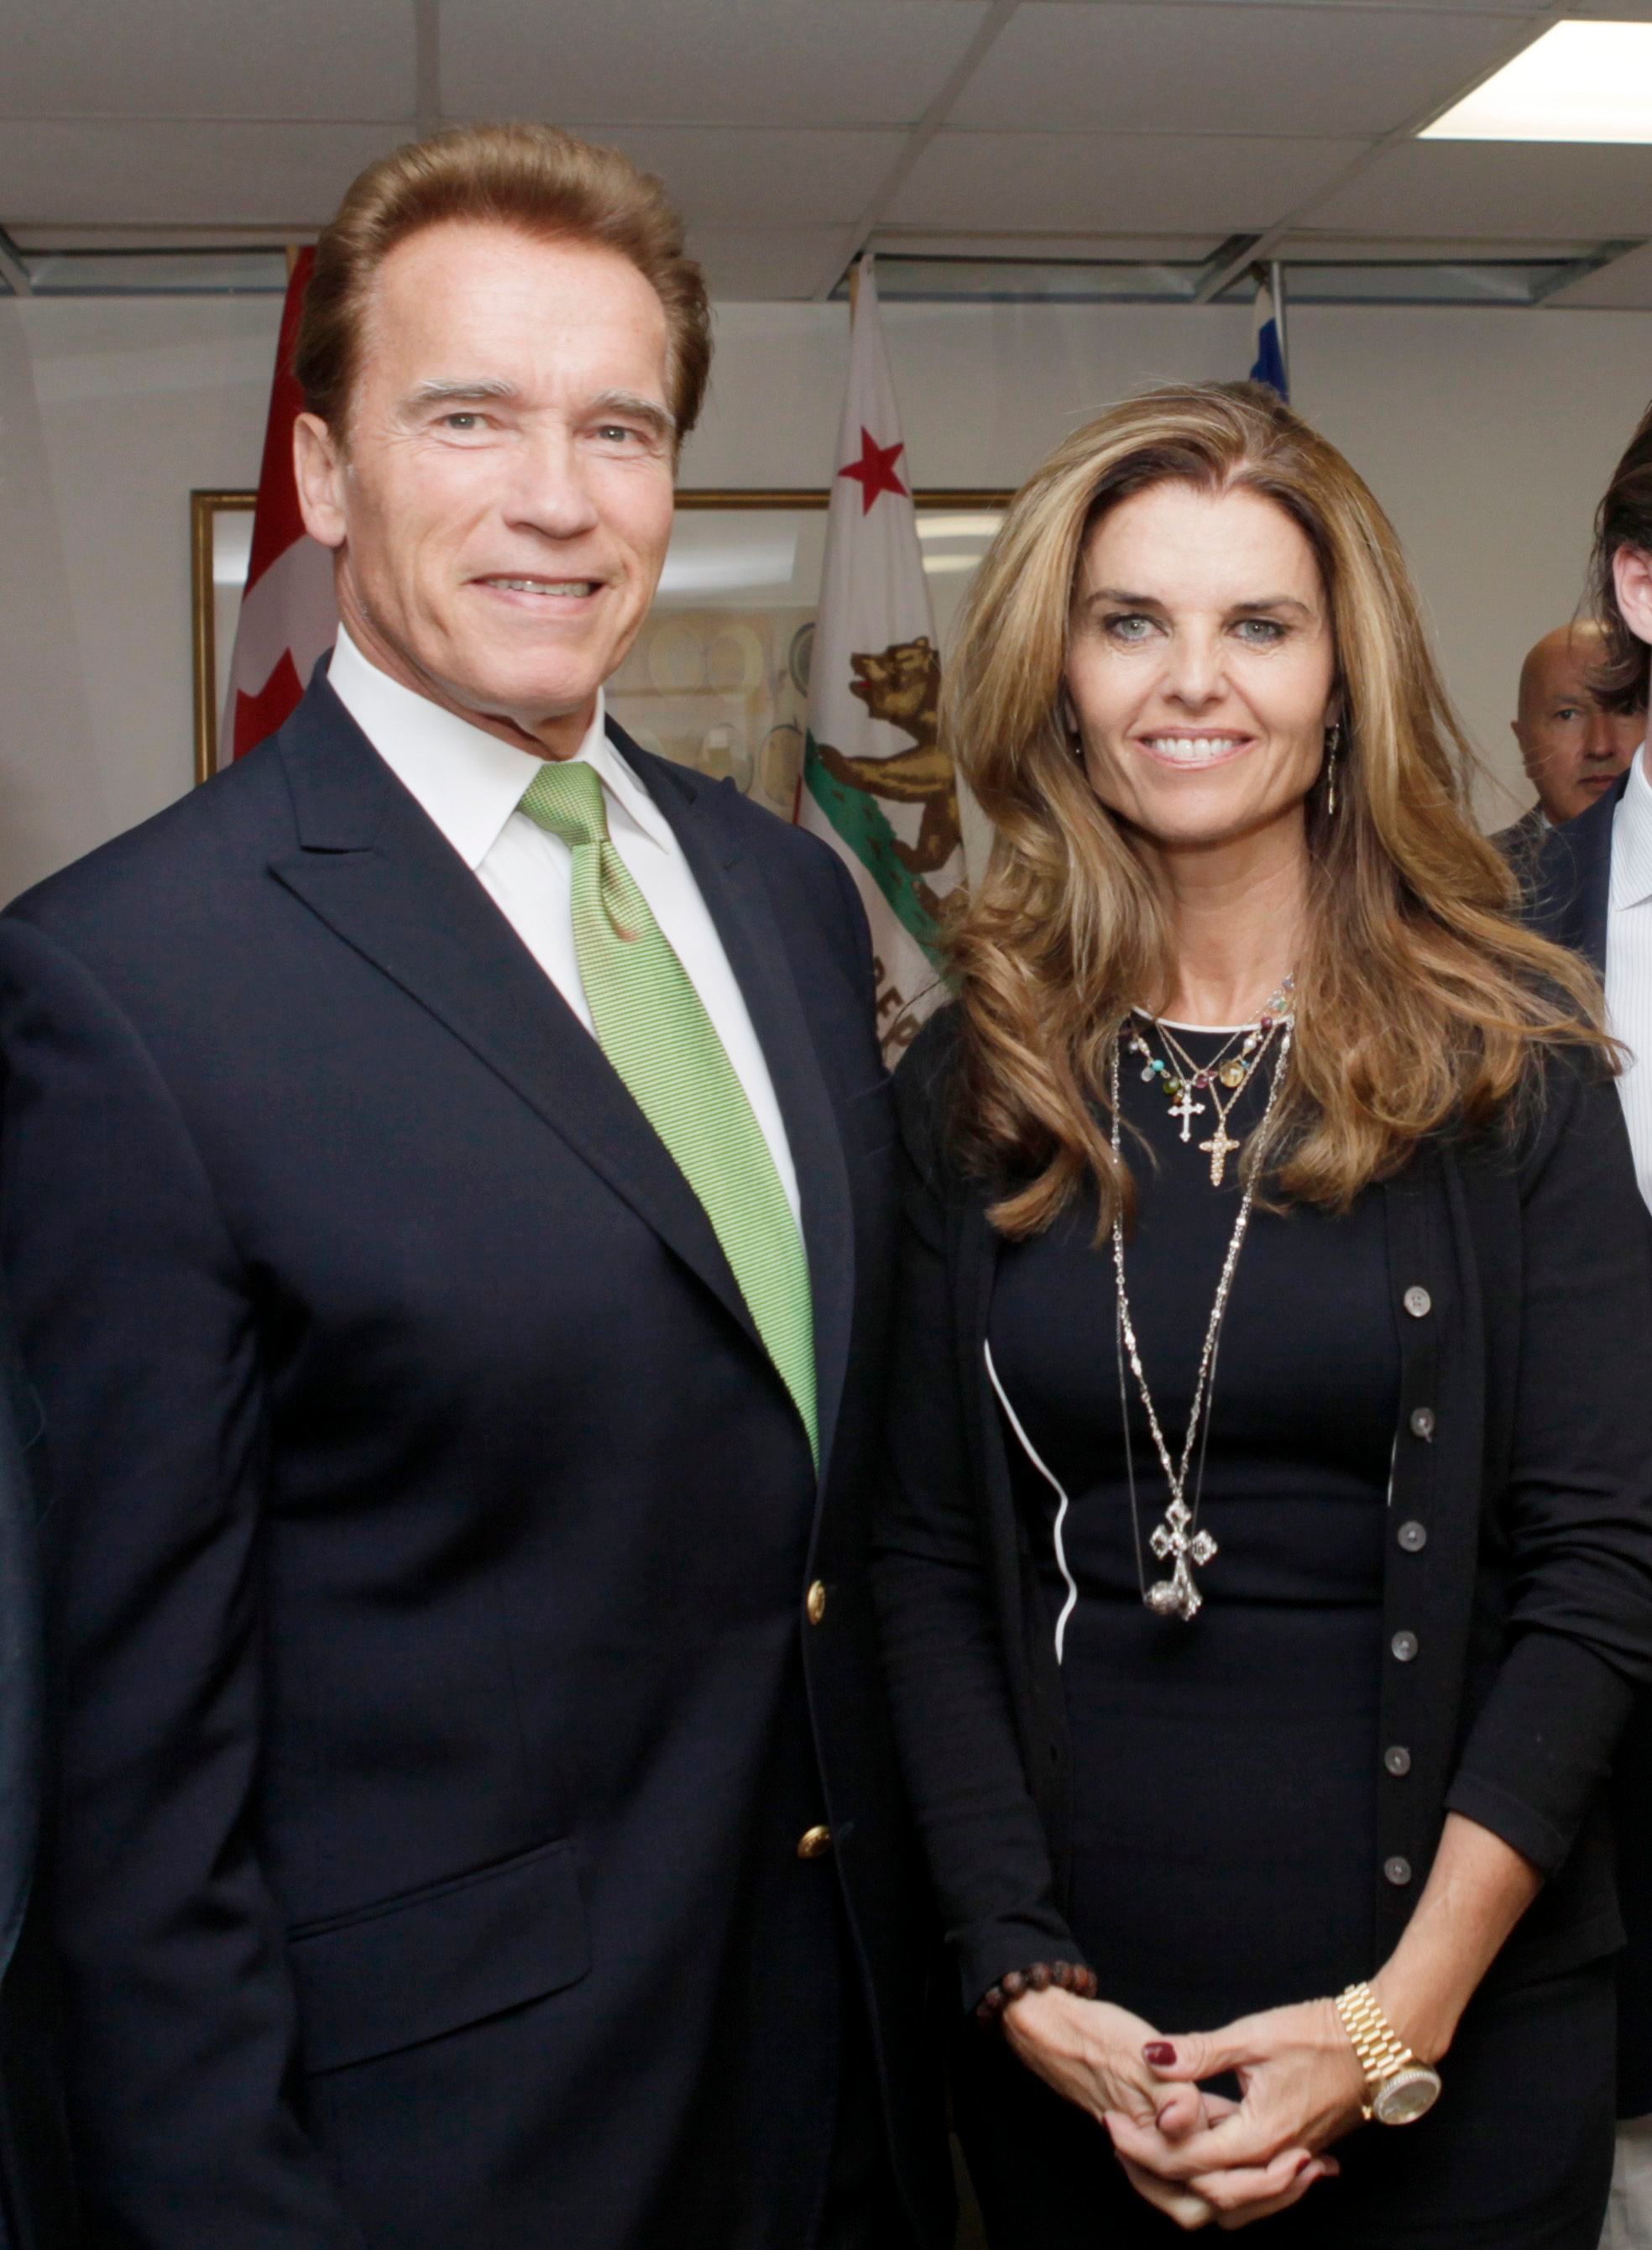 Hollywood's longest divorces - Arnold Schwarzenegger and Maria Shriver ...